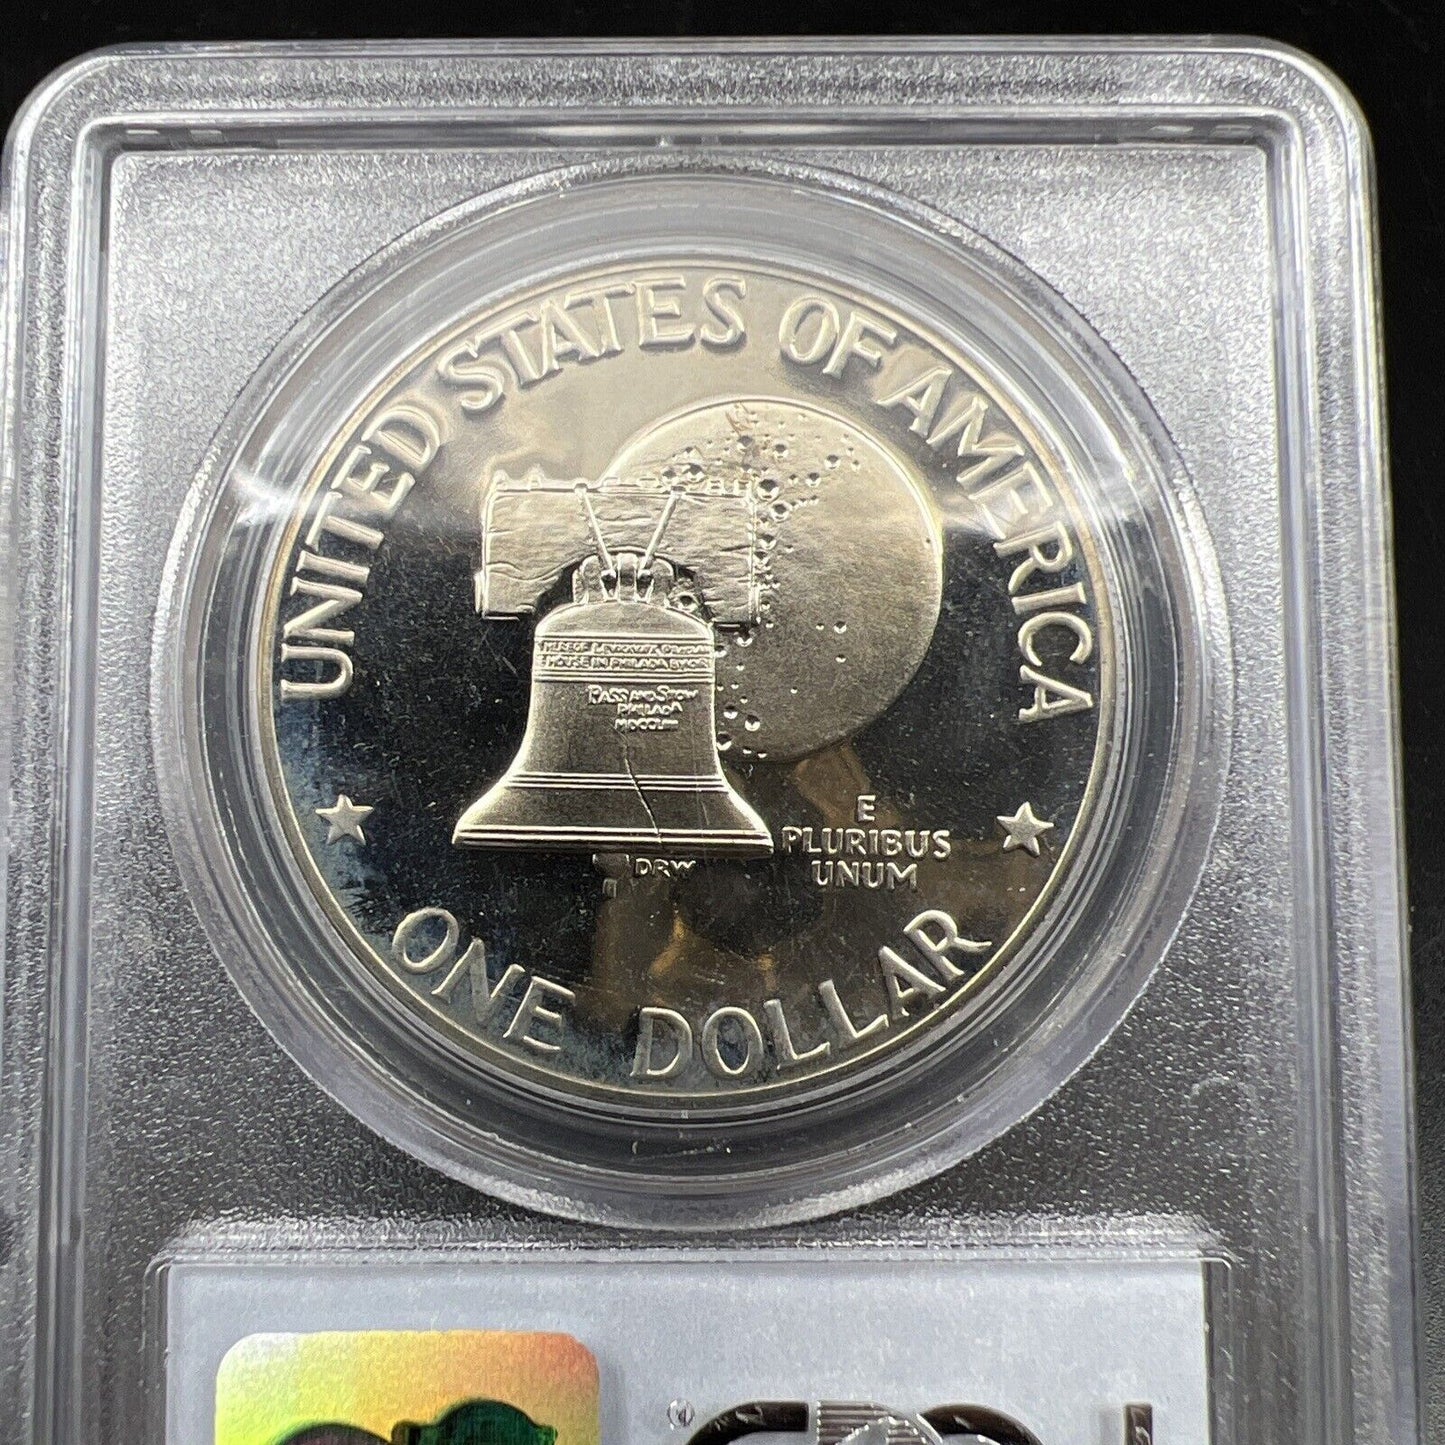 1976 S $1 Ike Eisenhower Dollar Clad Coin PR69 DCAM Type 2 Variety GEM Proof Ton